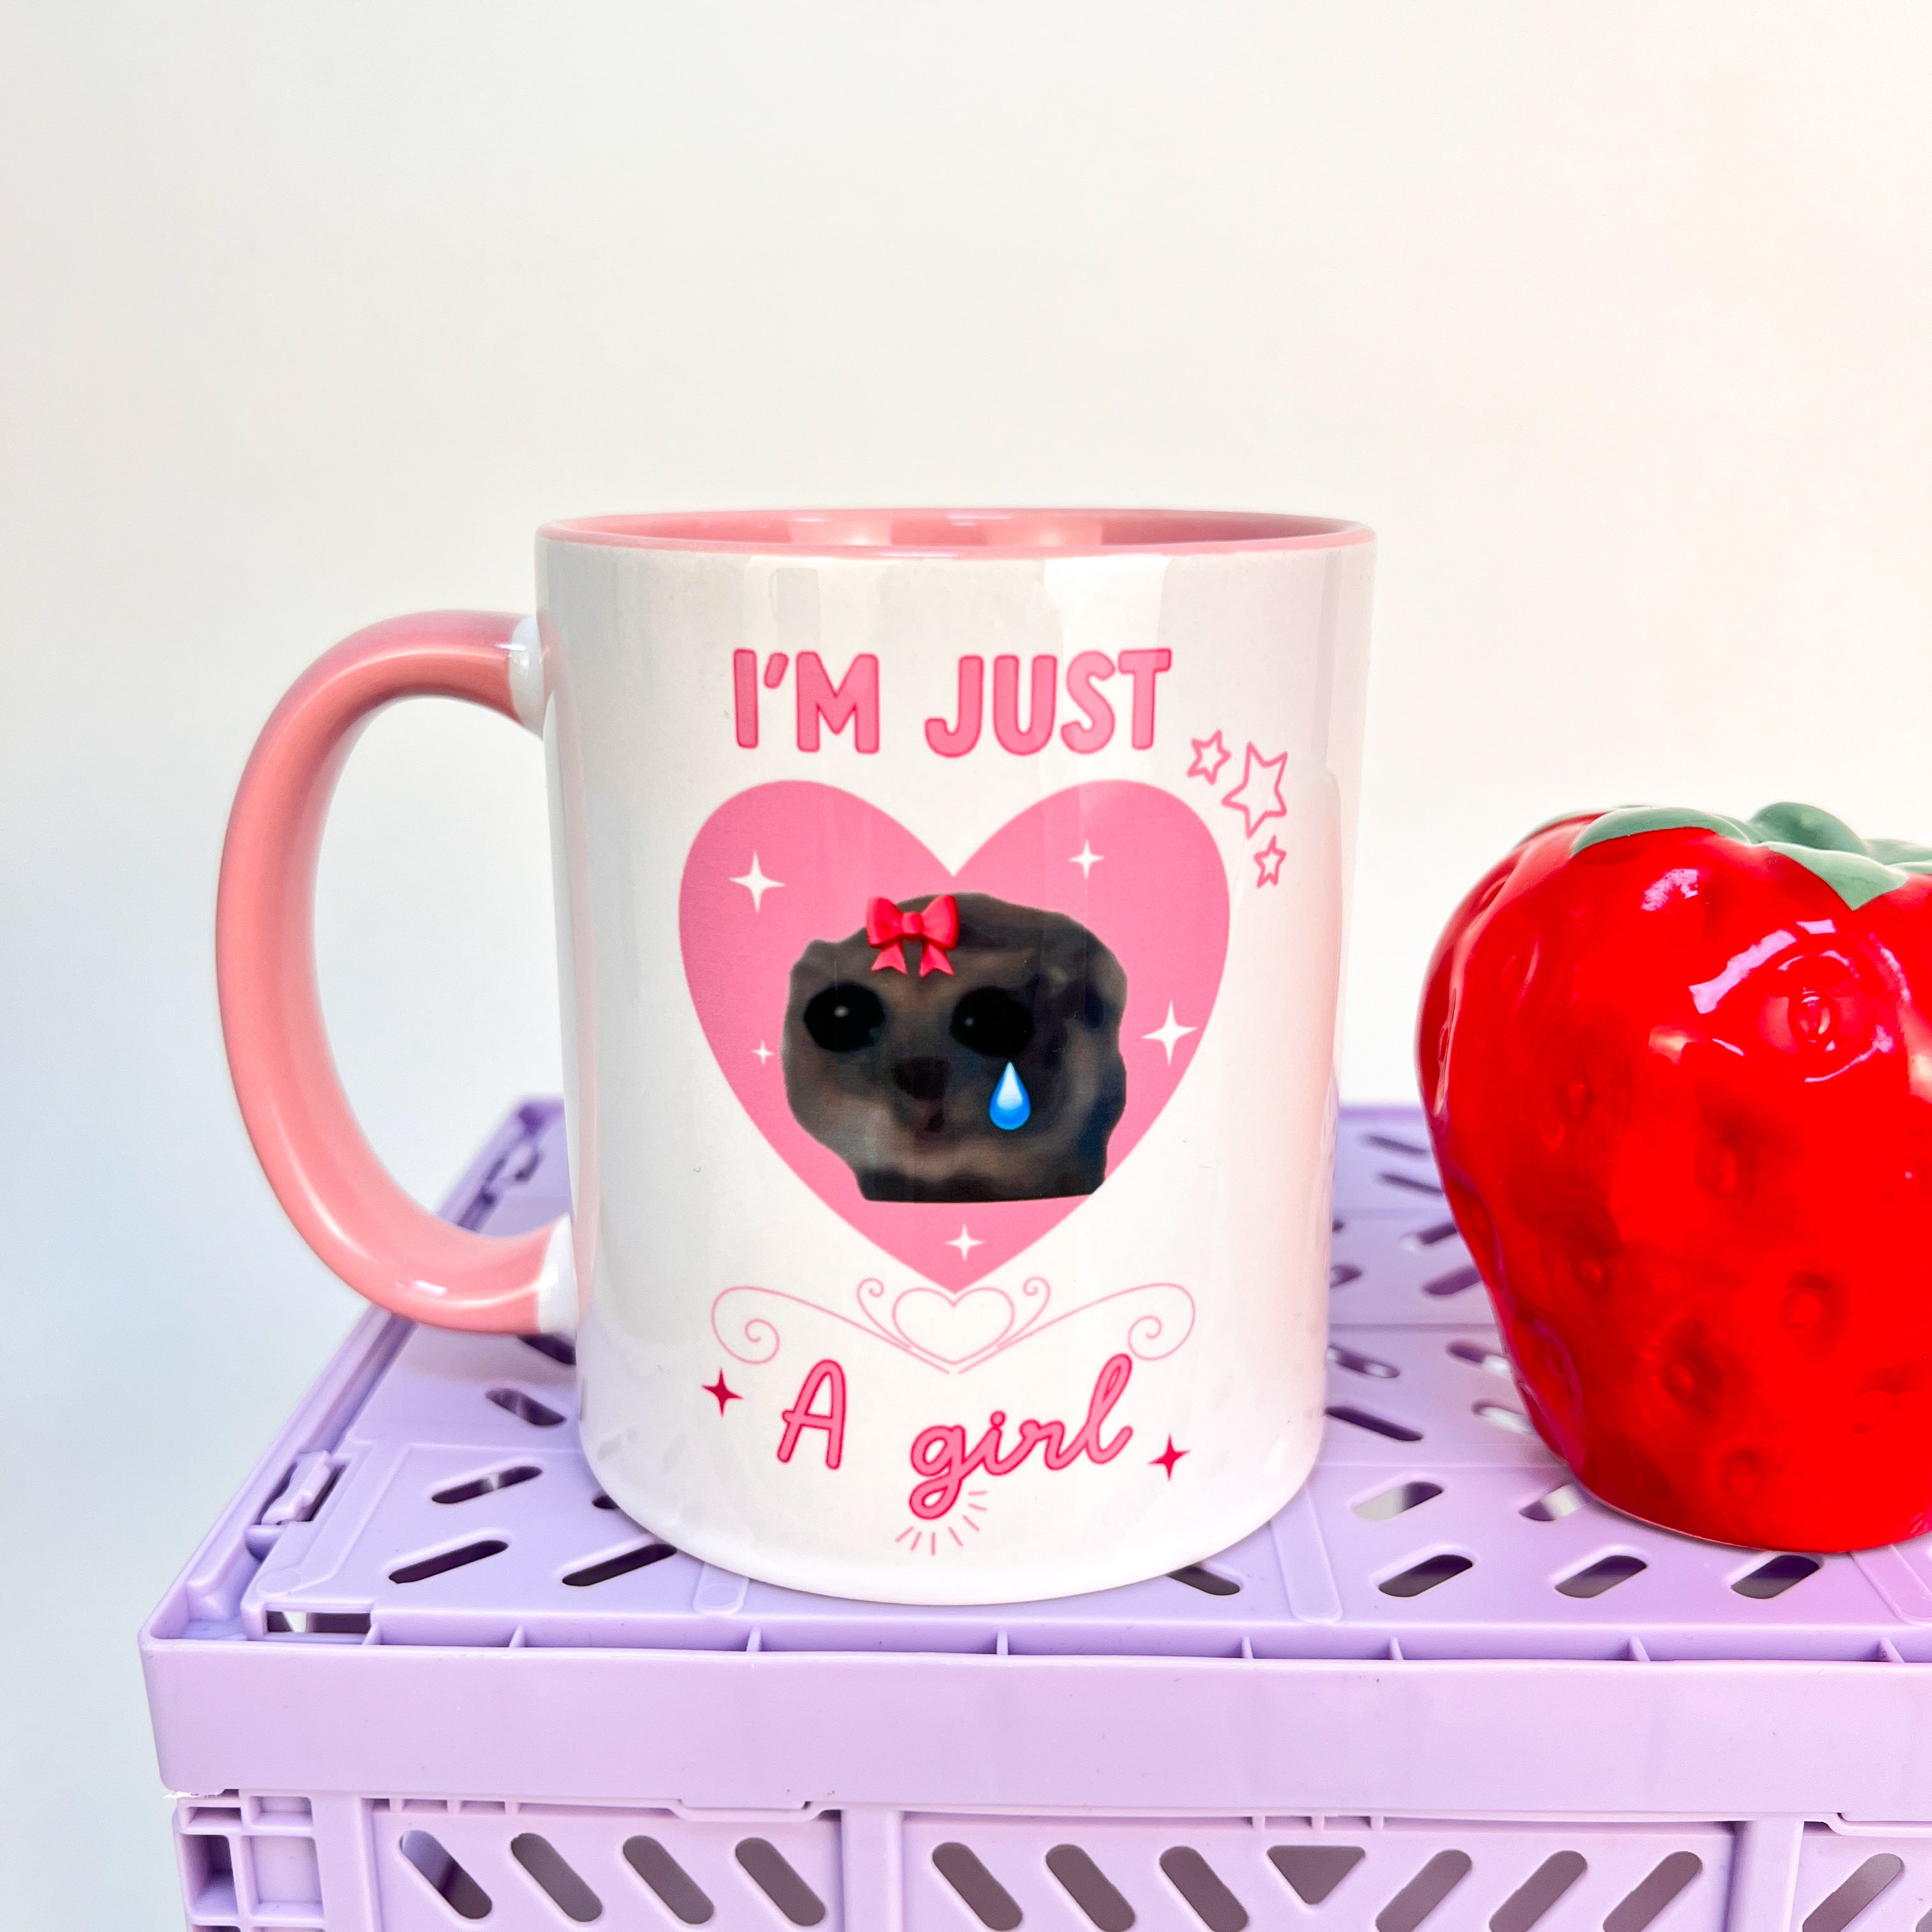 I'm just a girl mug